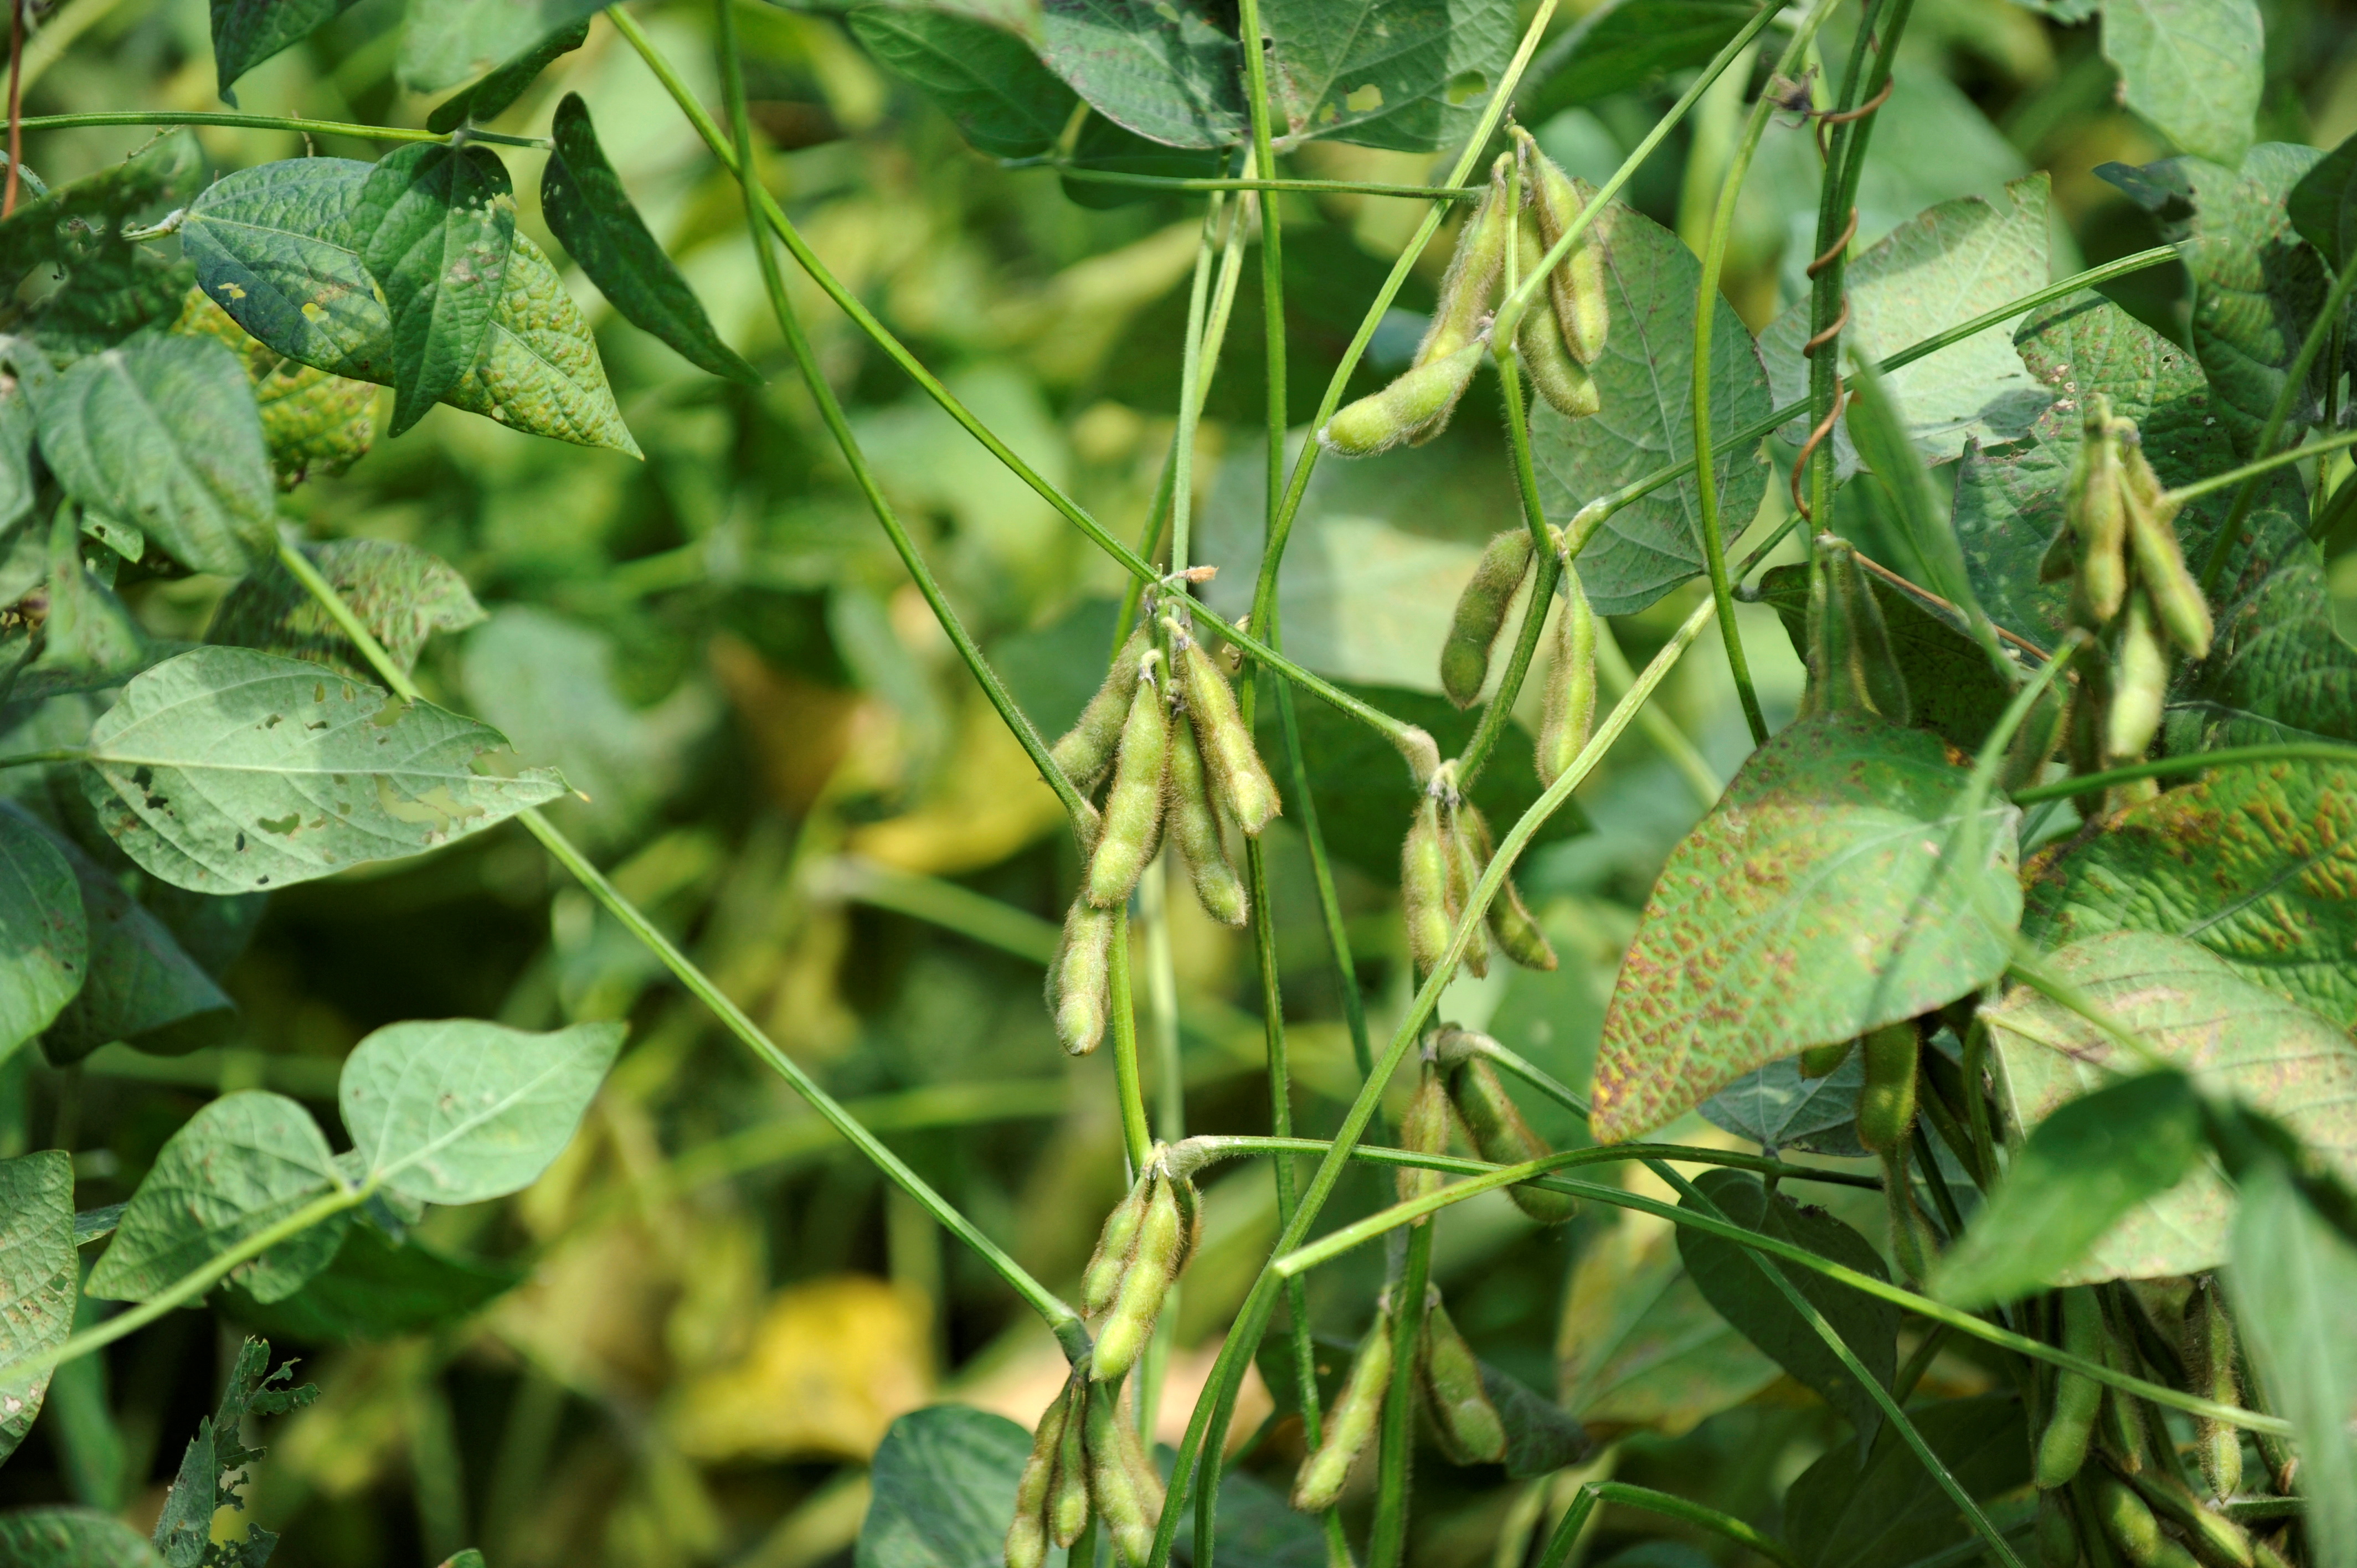 Soybean plants are seen on a farm near Norborne, Missouri